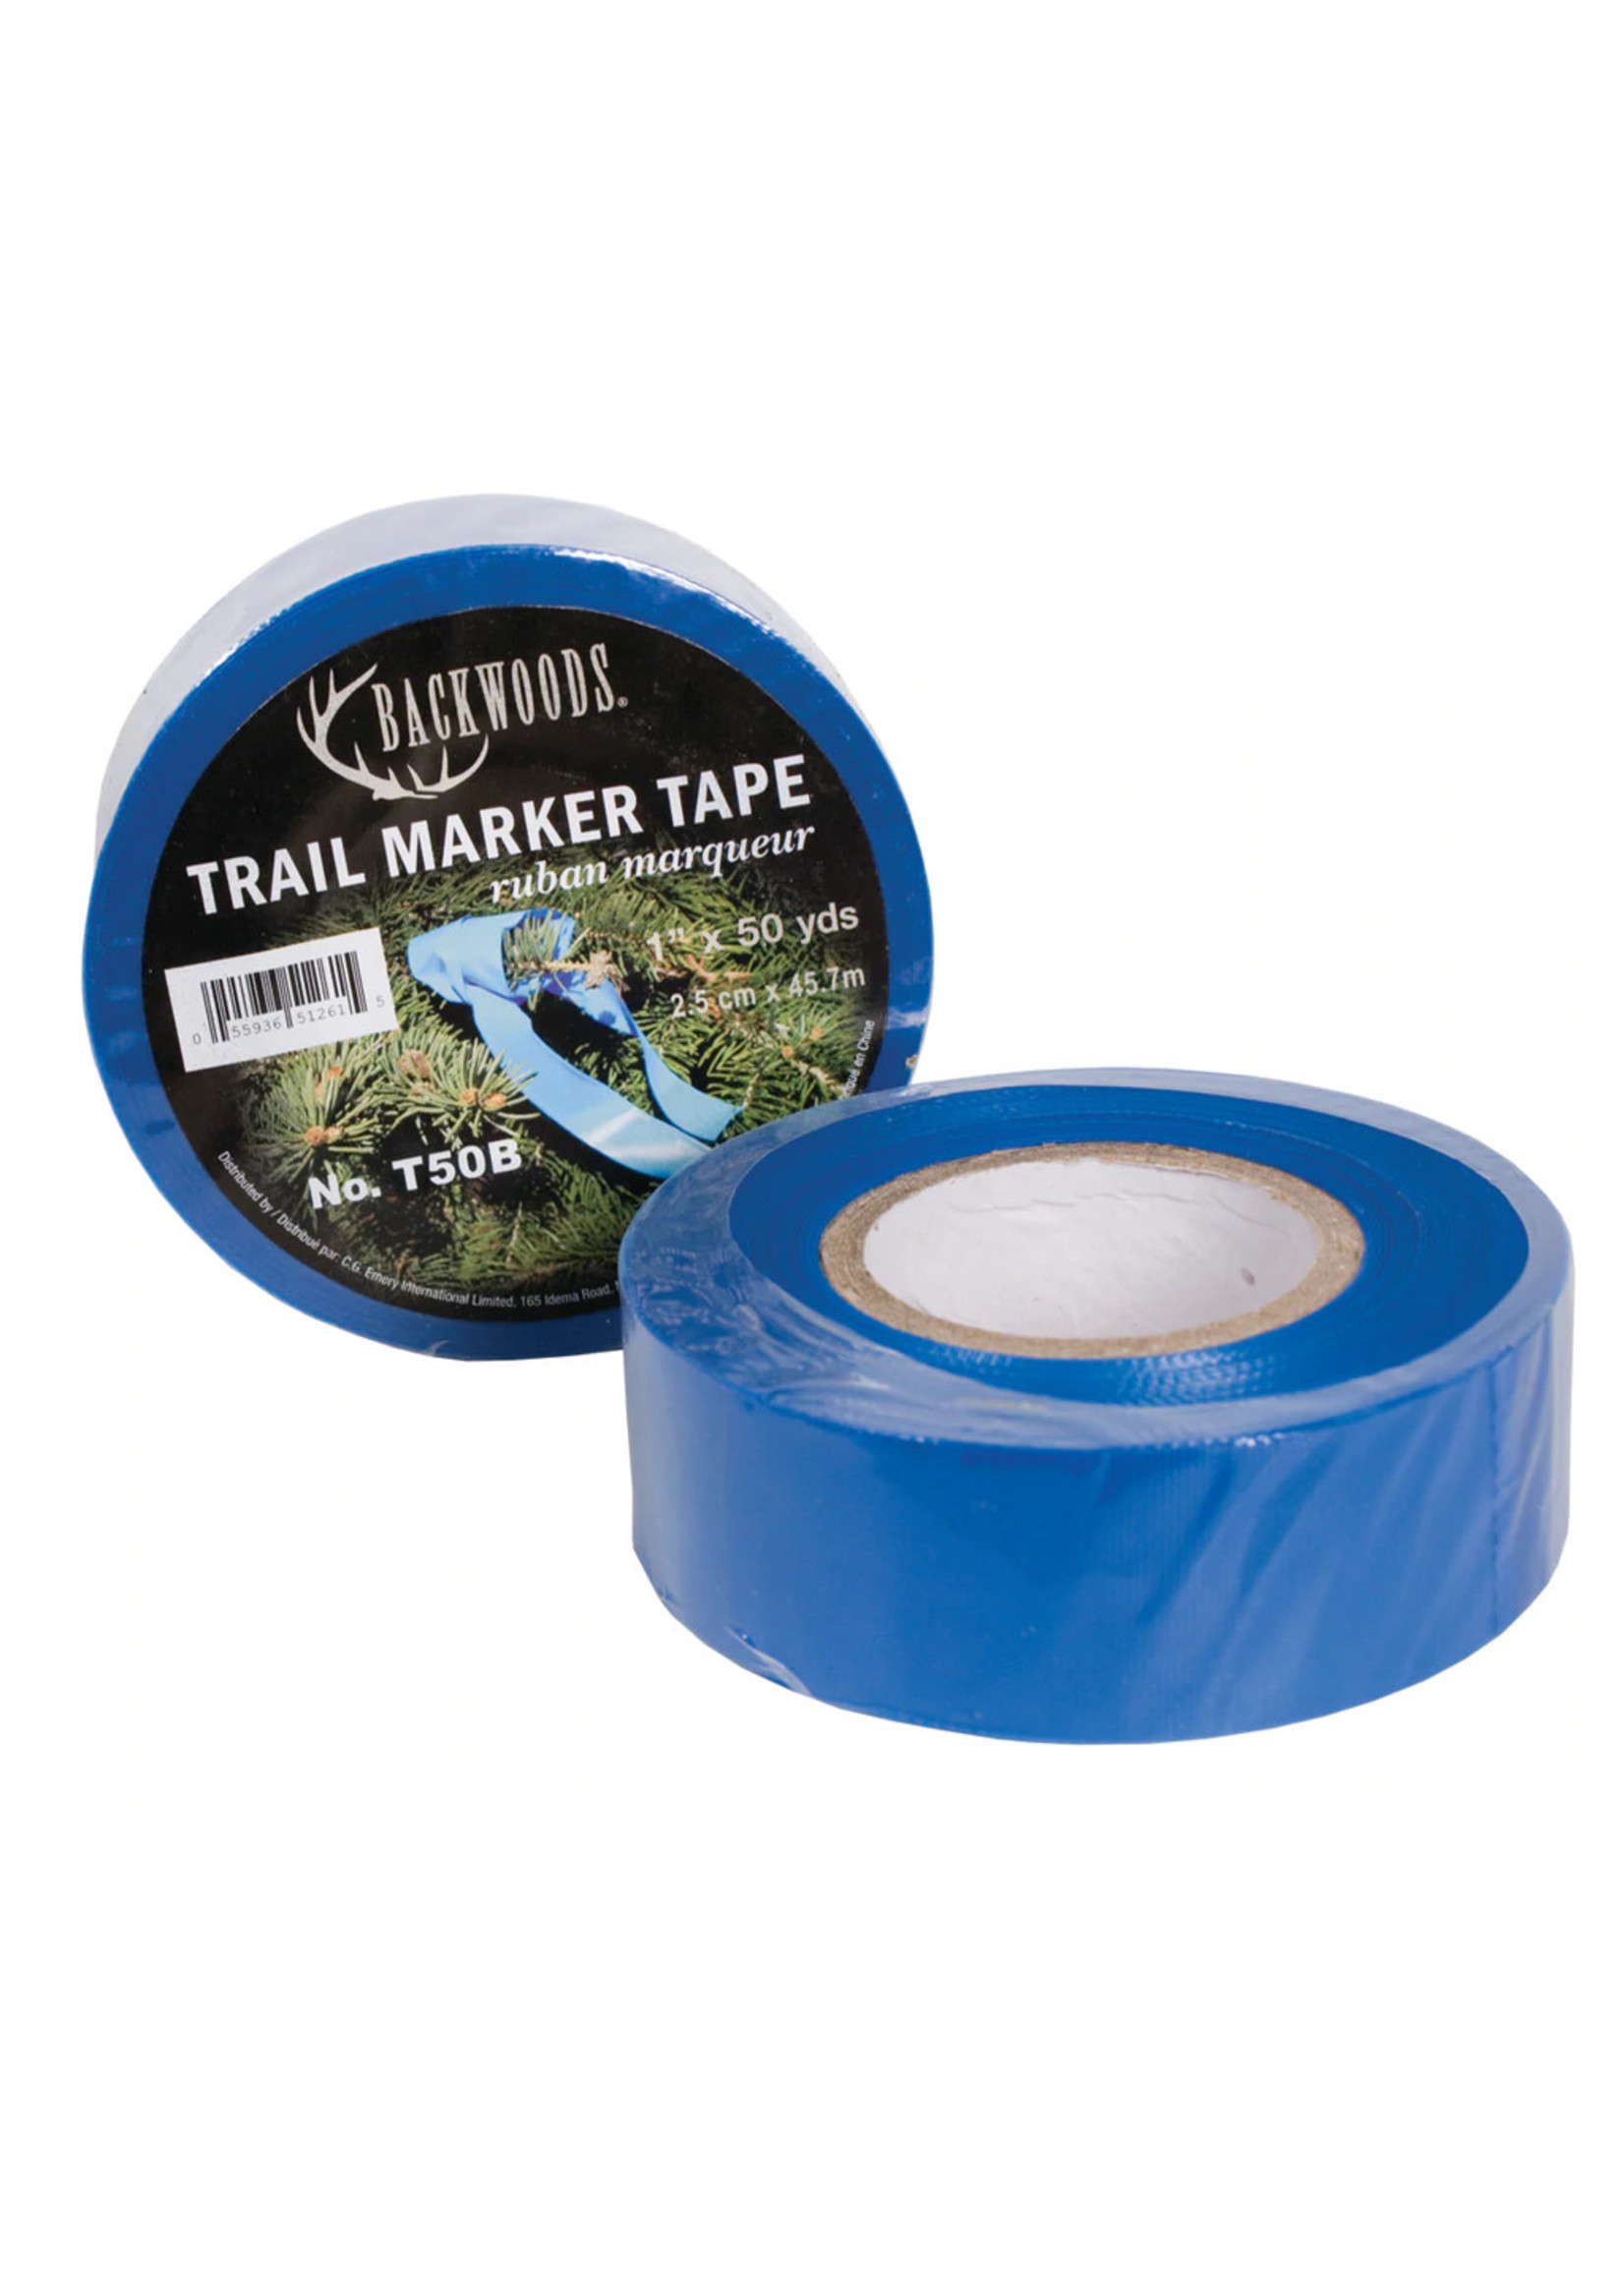 Backwoods trail marker tape blue